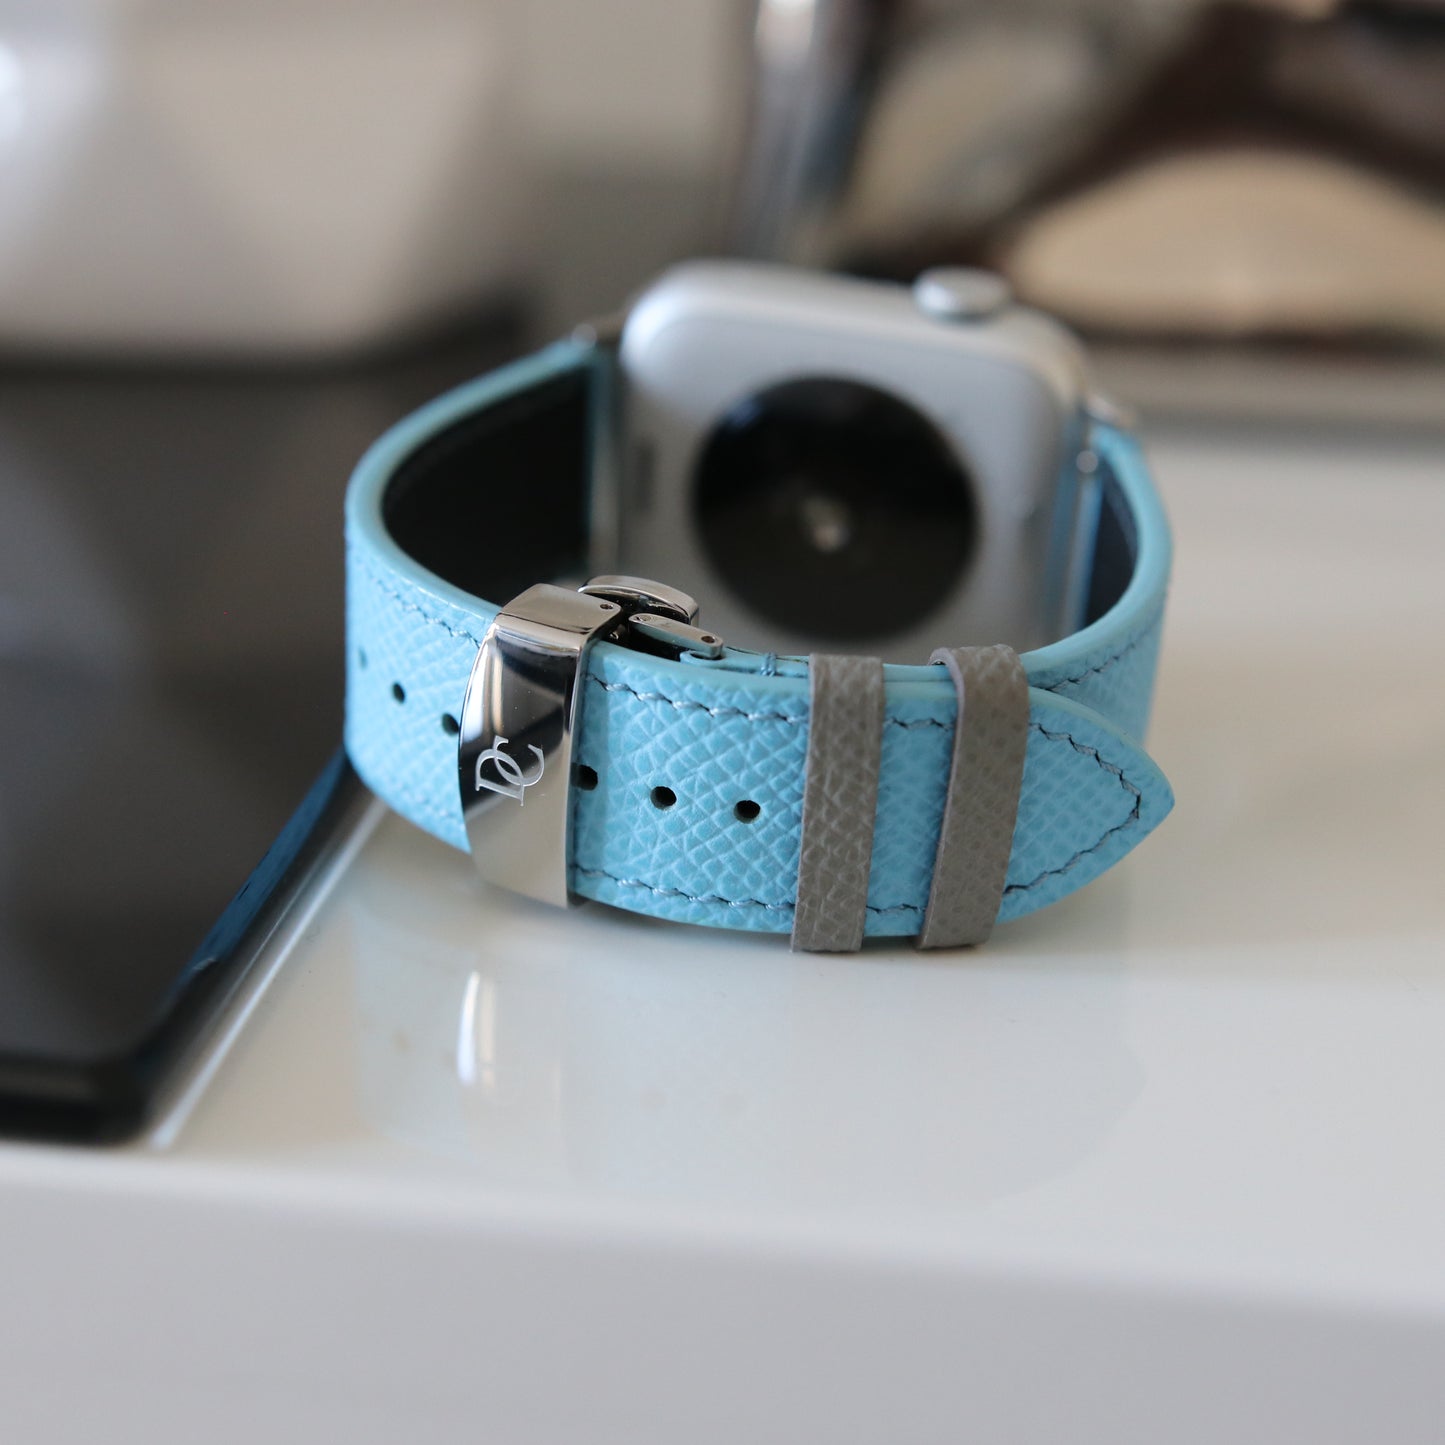 Apple Watch Band - Epsom leather - Elegance Series